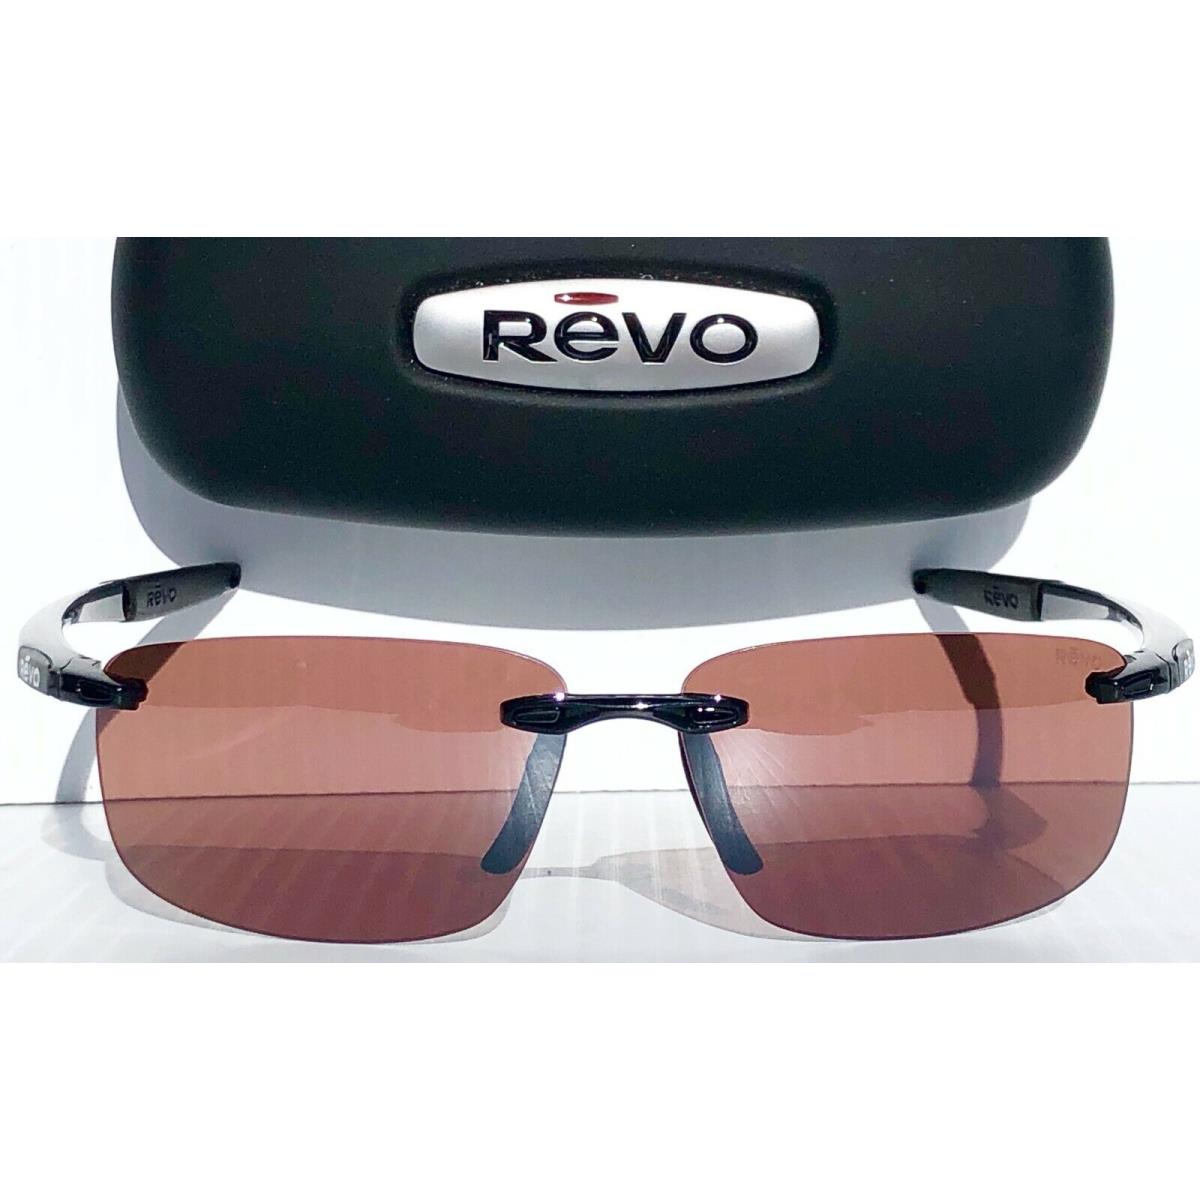 Revo sunglasses Descend - Black Frame, Brown Lens